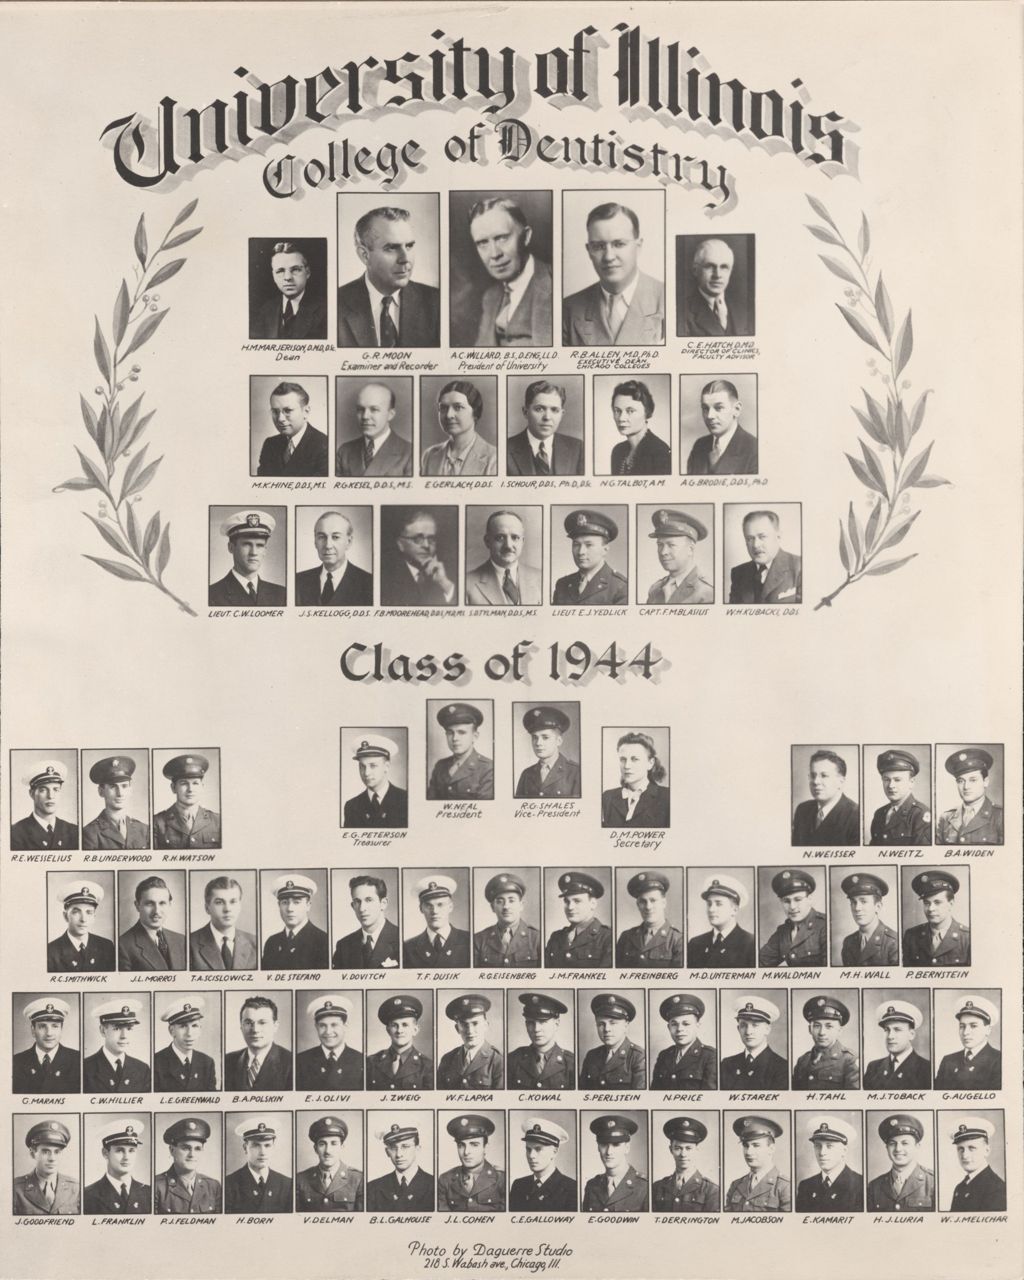 1944 graduating class, University of Illinois College of Dentistry